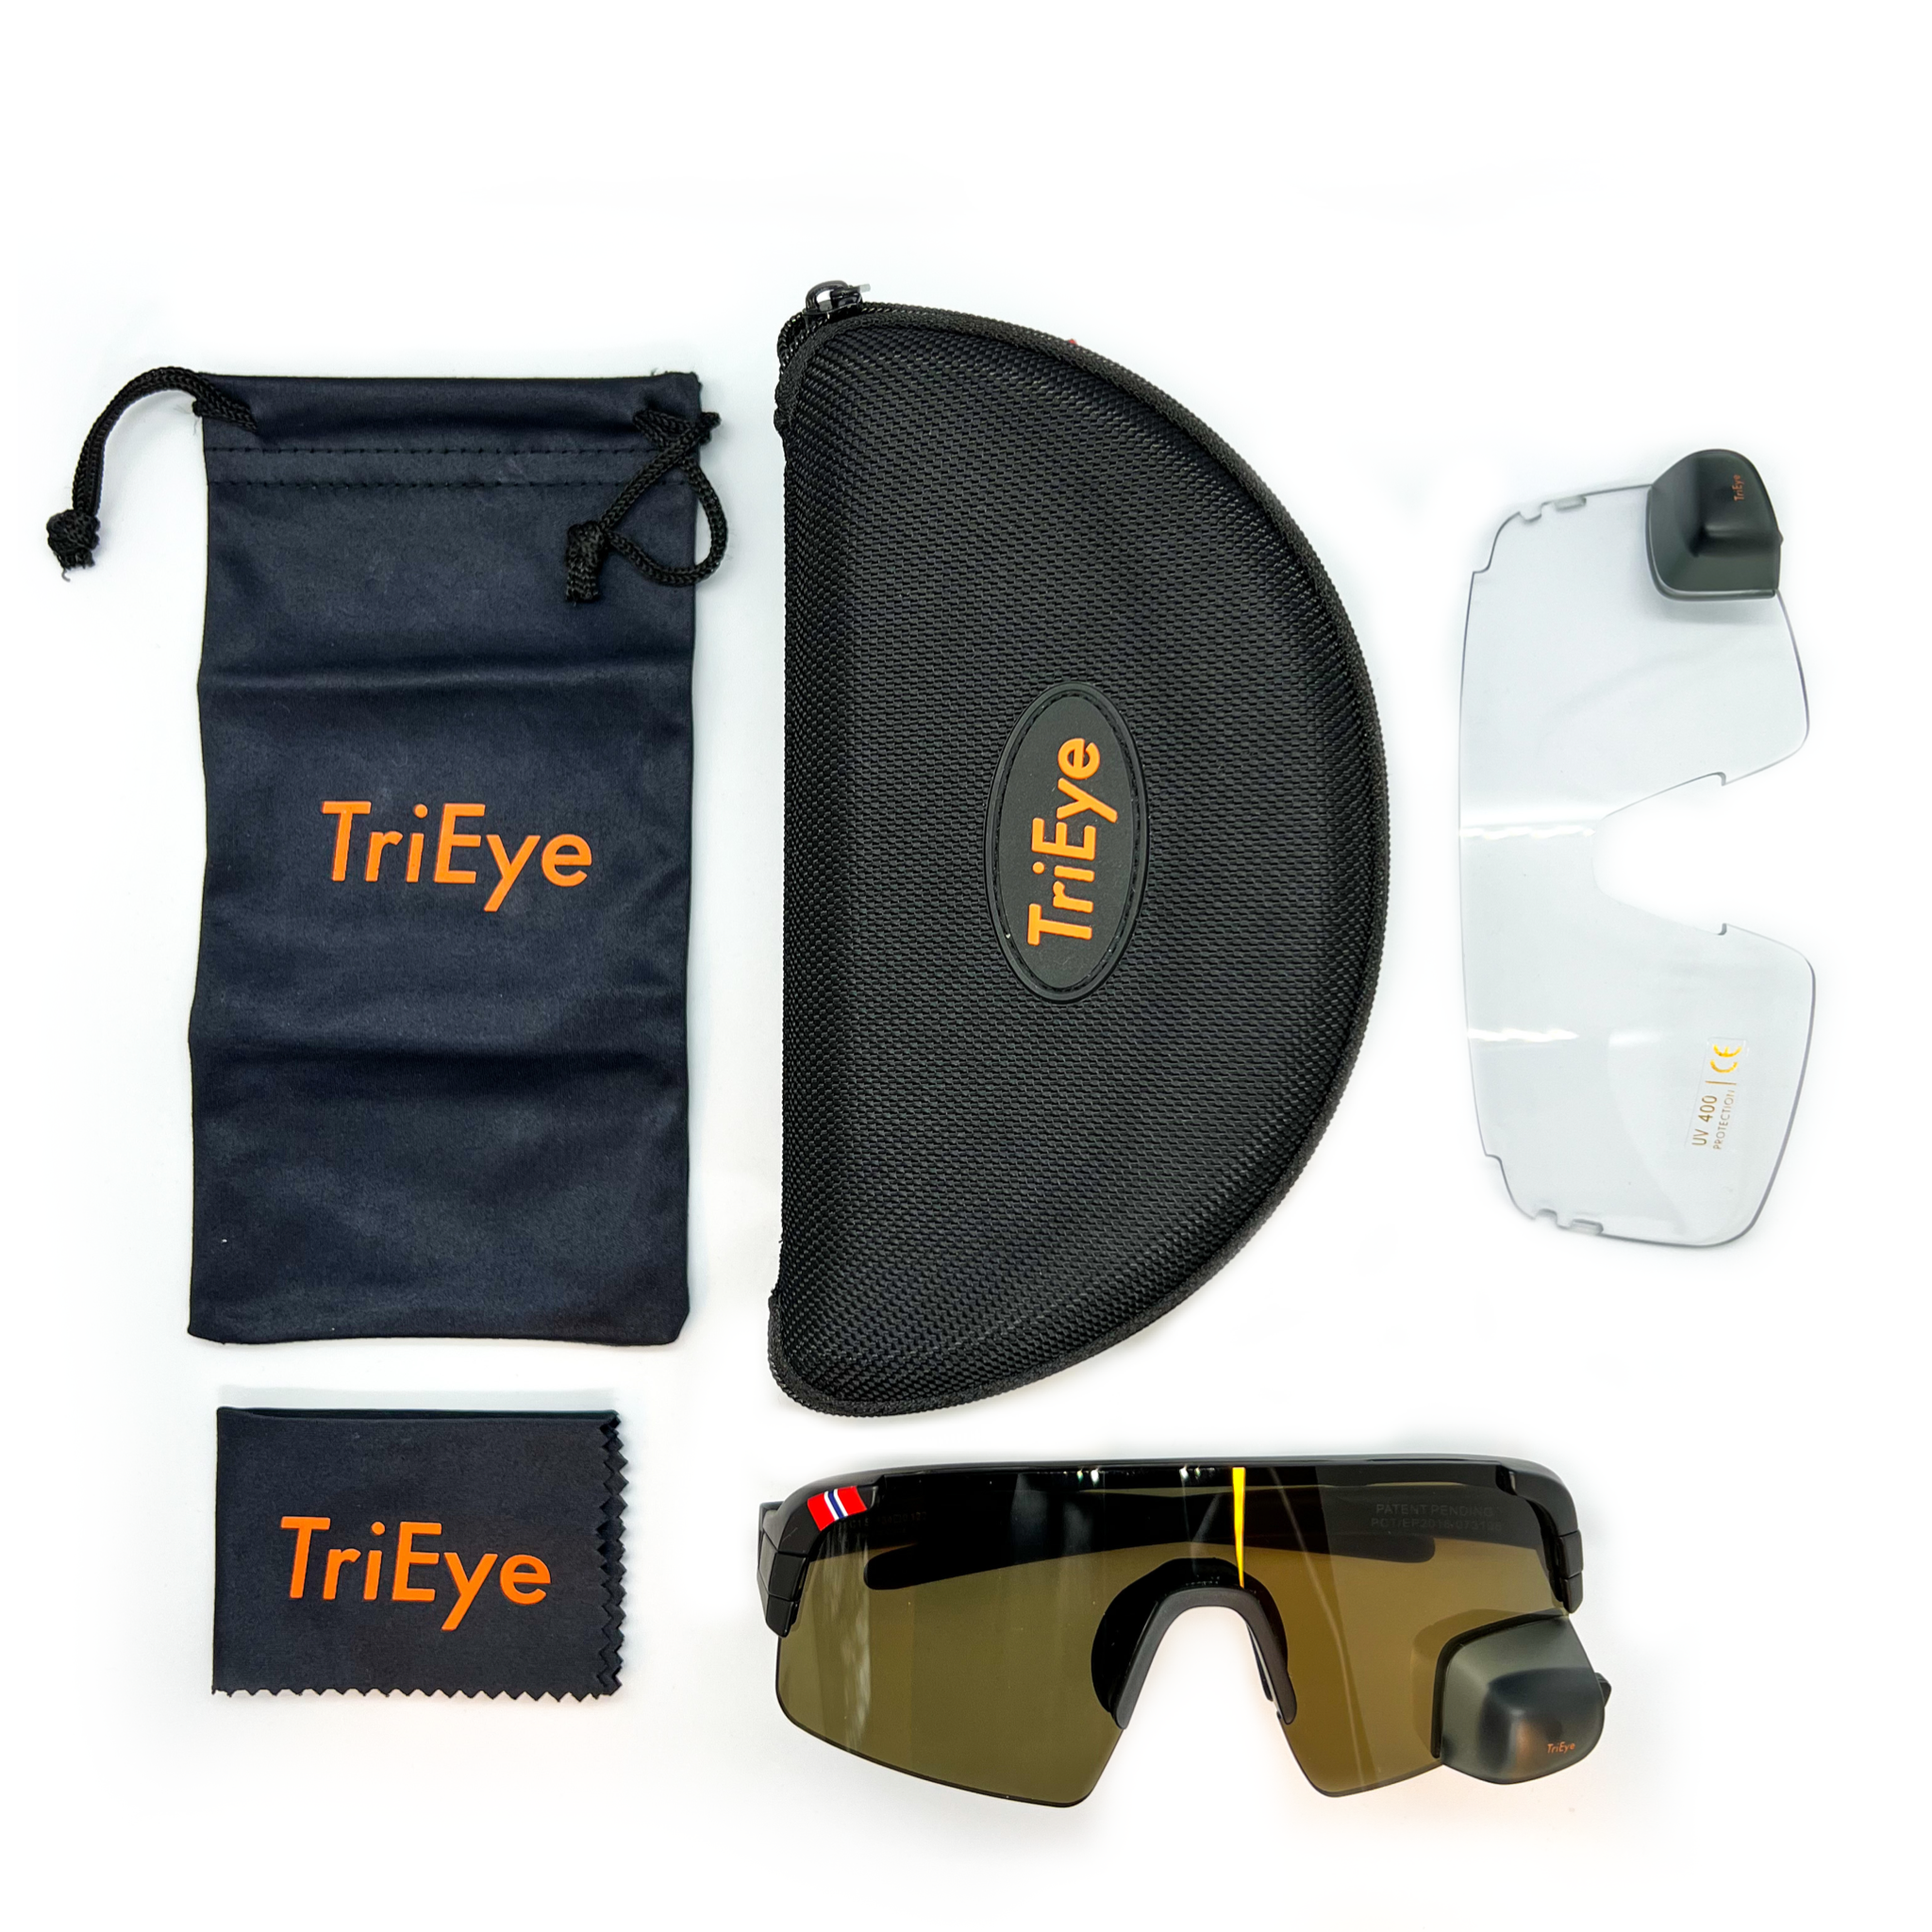 TriEye View Sport High Definition incl. clear lens and a travelbox - BIKE BILD Edition